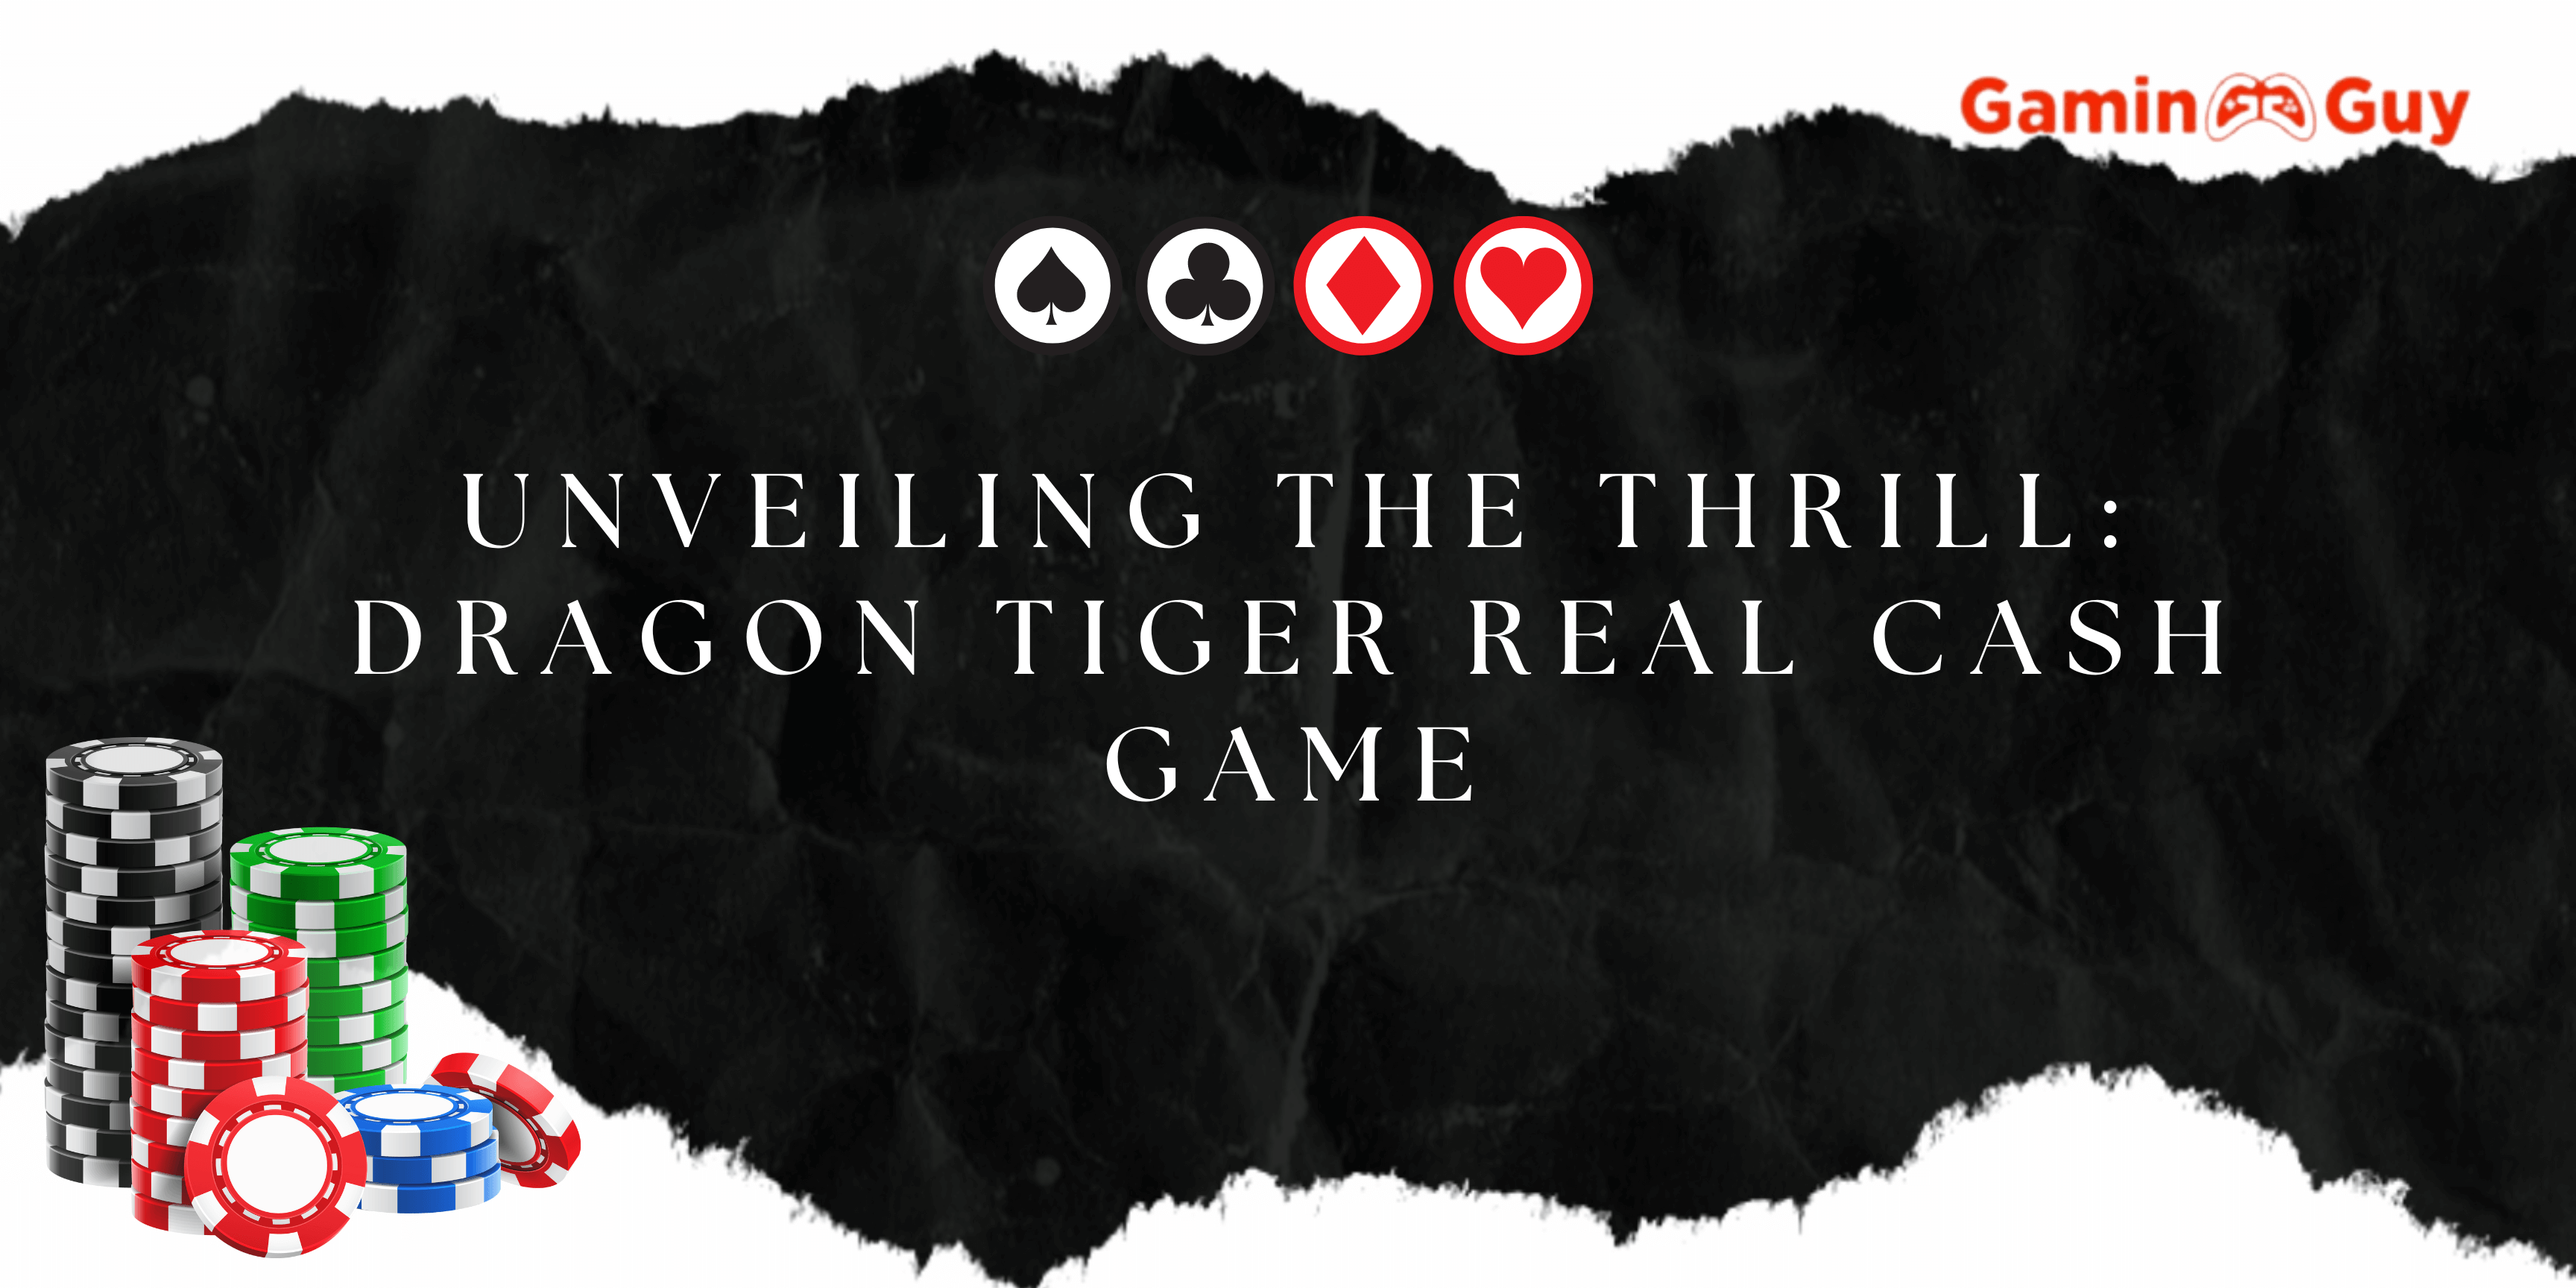 Dragon tiger real cash game